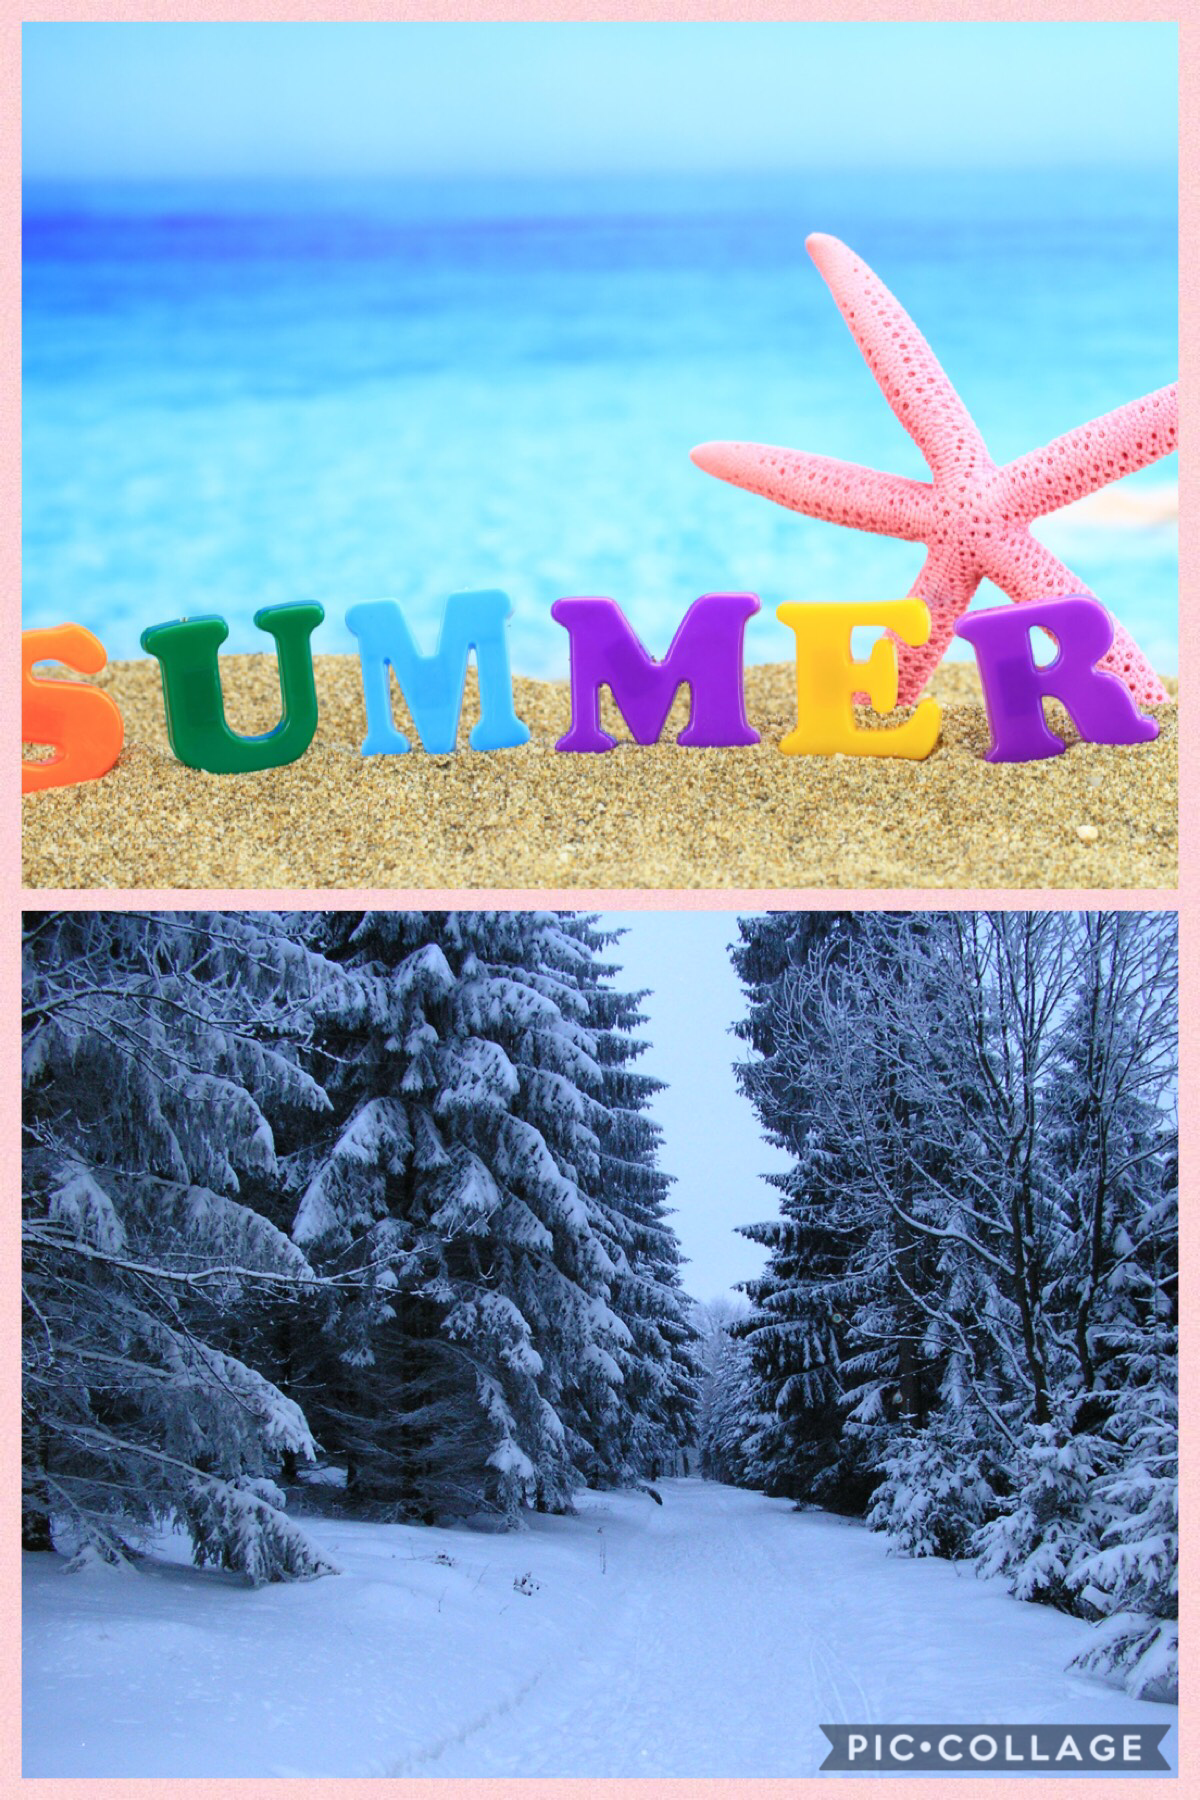 SUMMER OR WINTER?